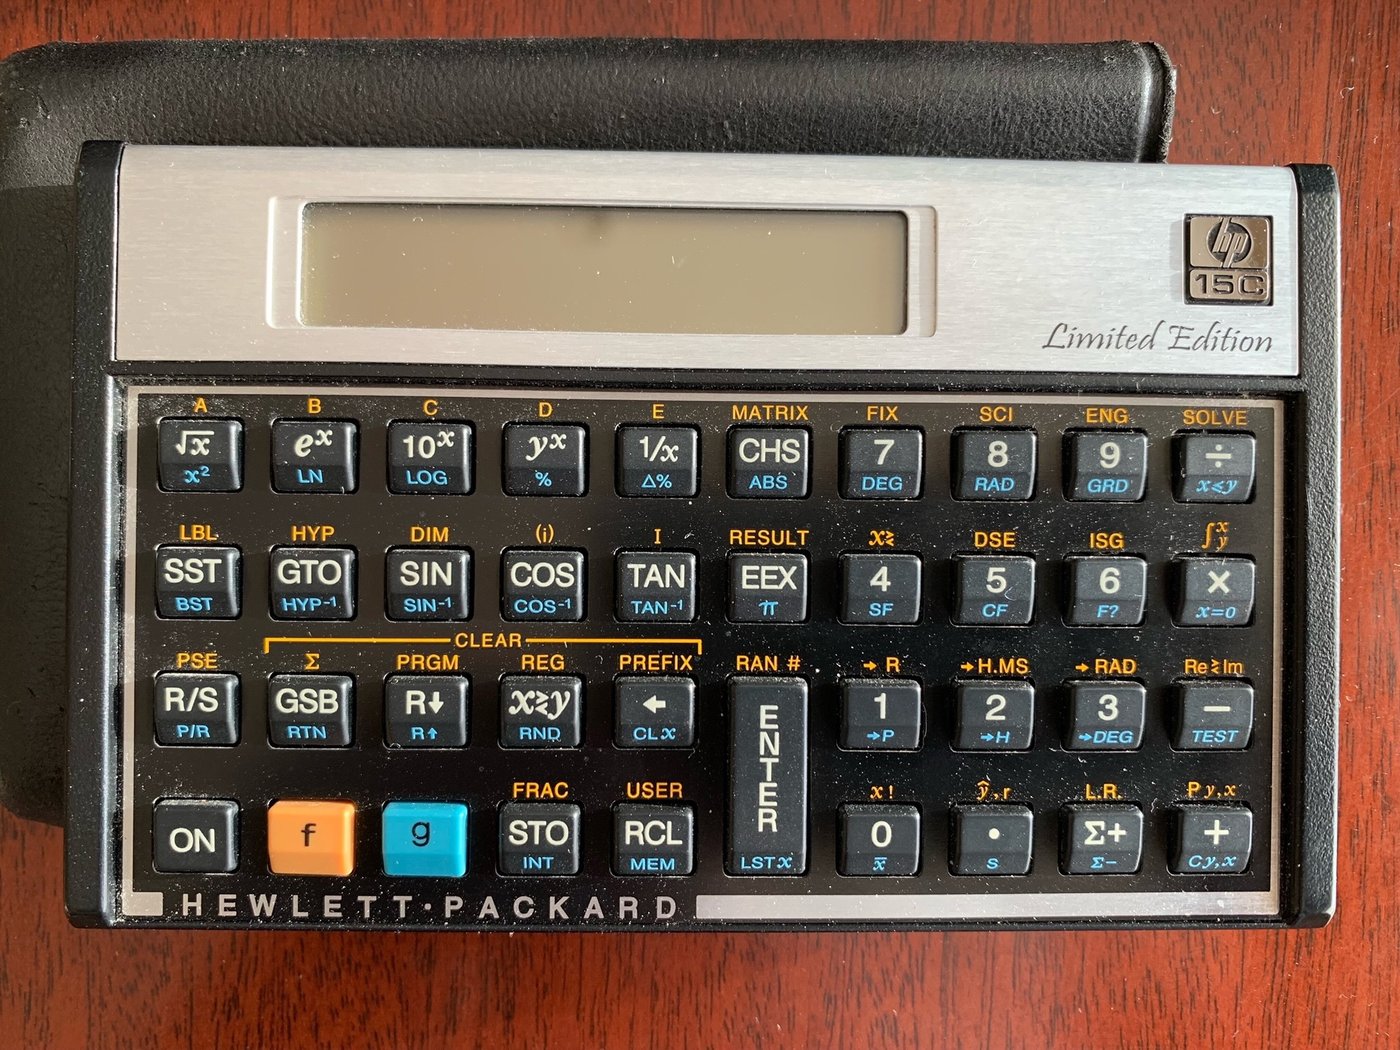 HP 15c Limited Edition Scientific Calculator 